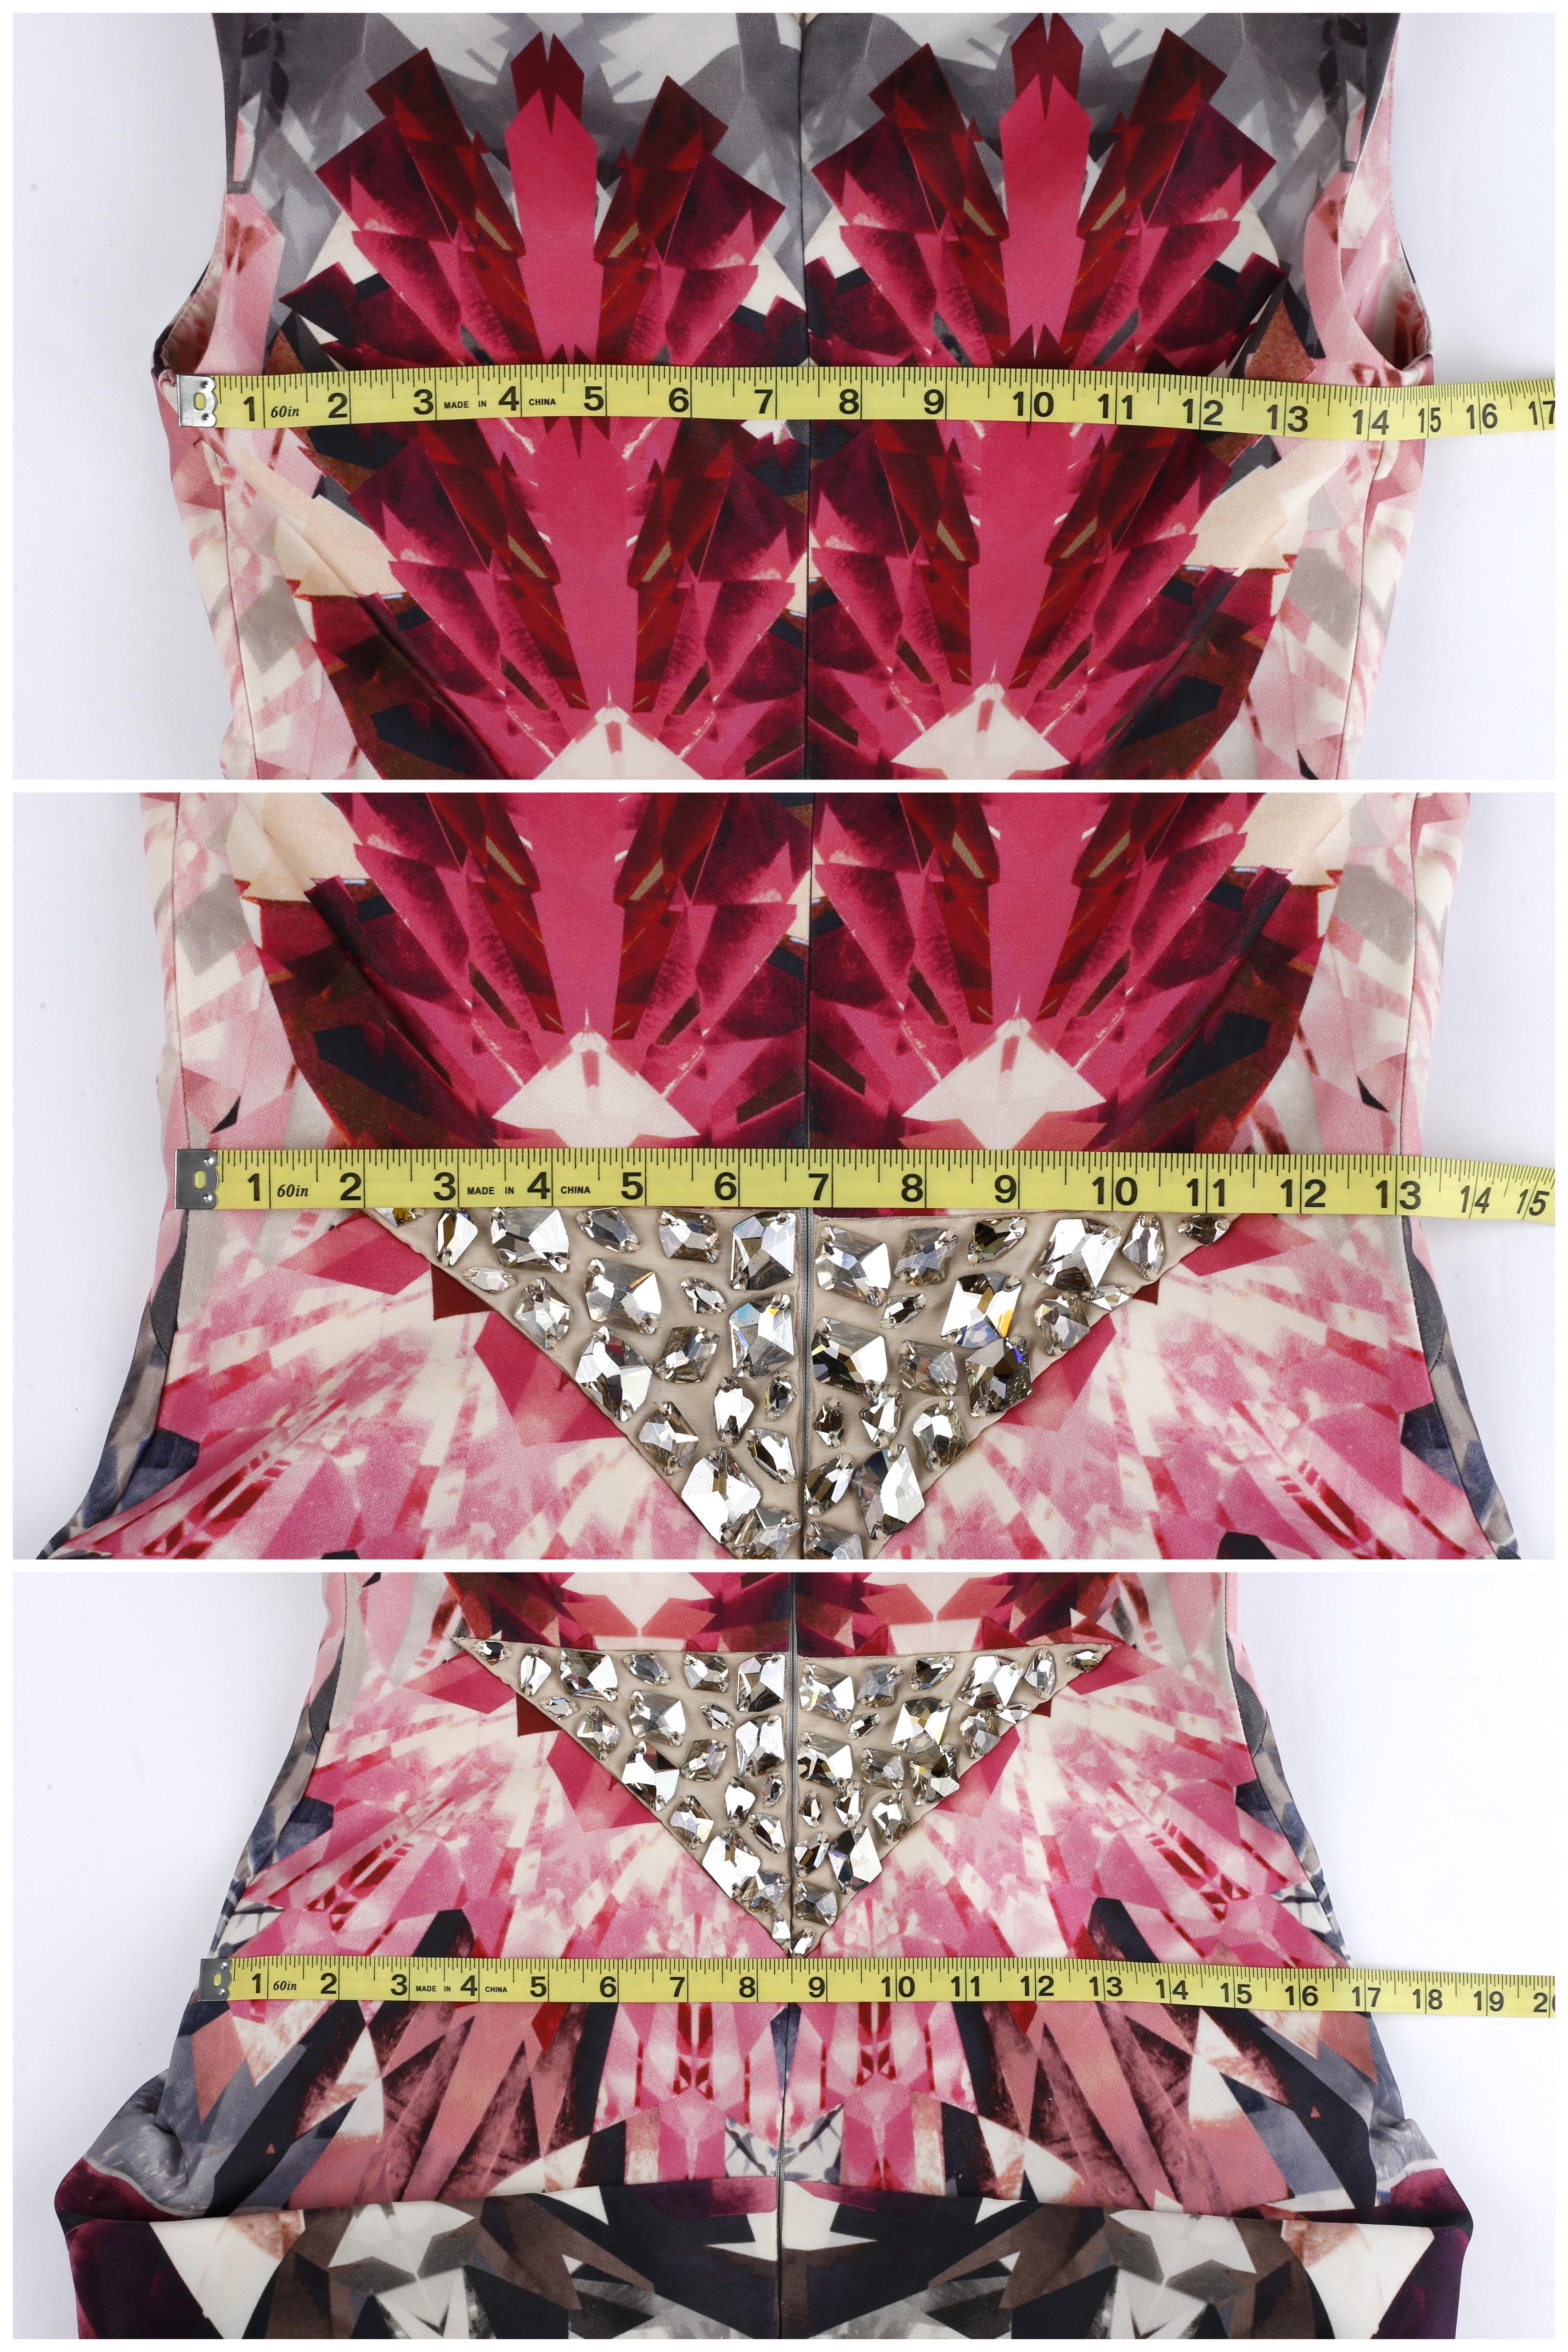 Alexander McQueen S/S 2009 Swarovski Crystal Structured Kaleidoscope Mini Dress For Sale 9